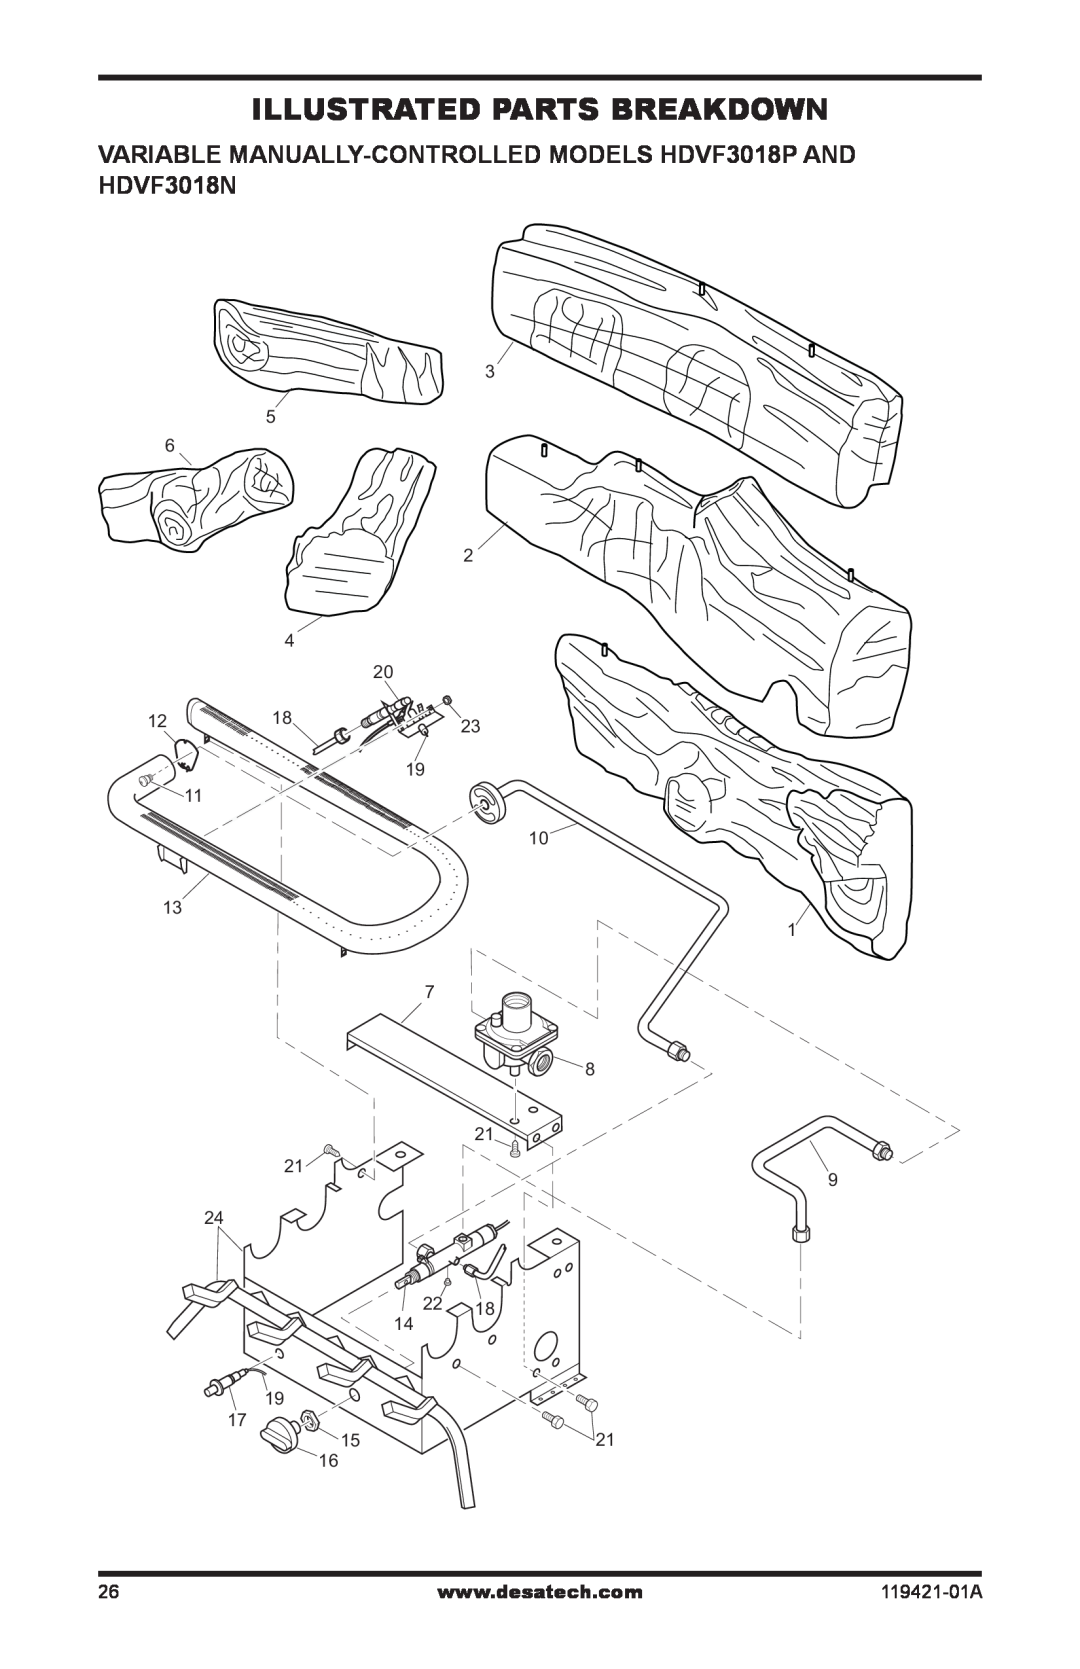 Desa HDVF3018P, HDVF3018N installation manual Illustrated Parts Breakdown 